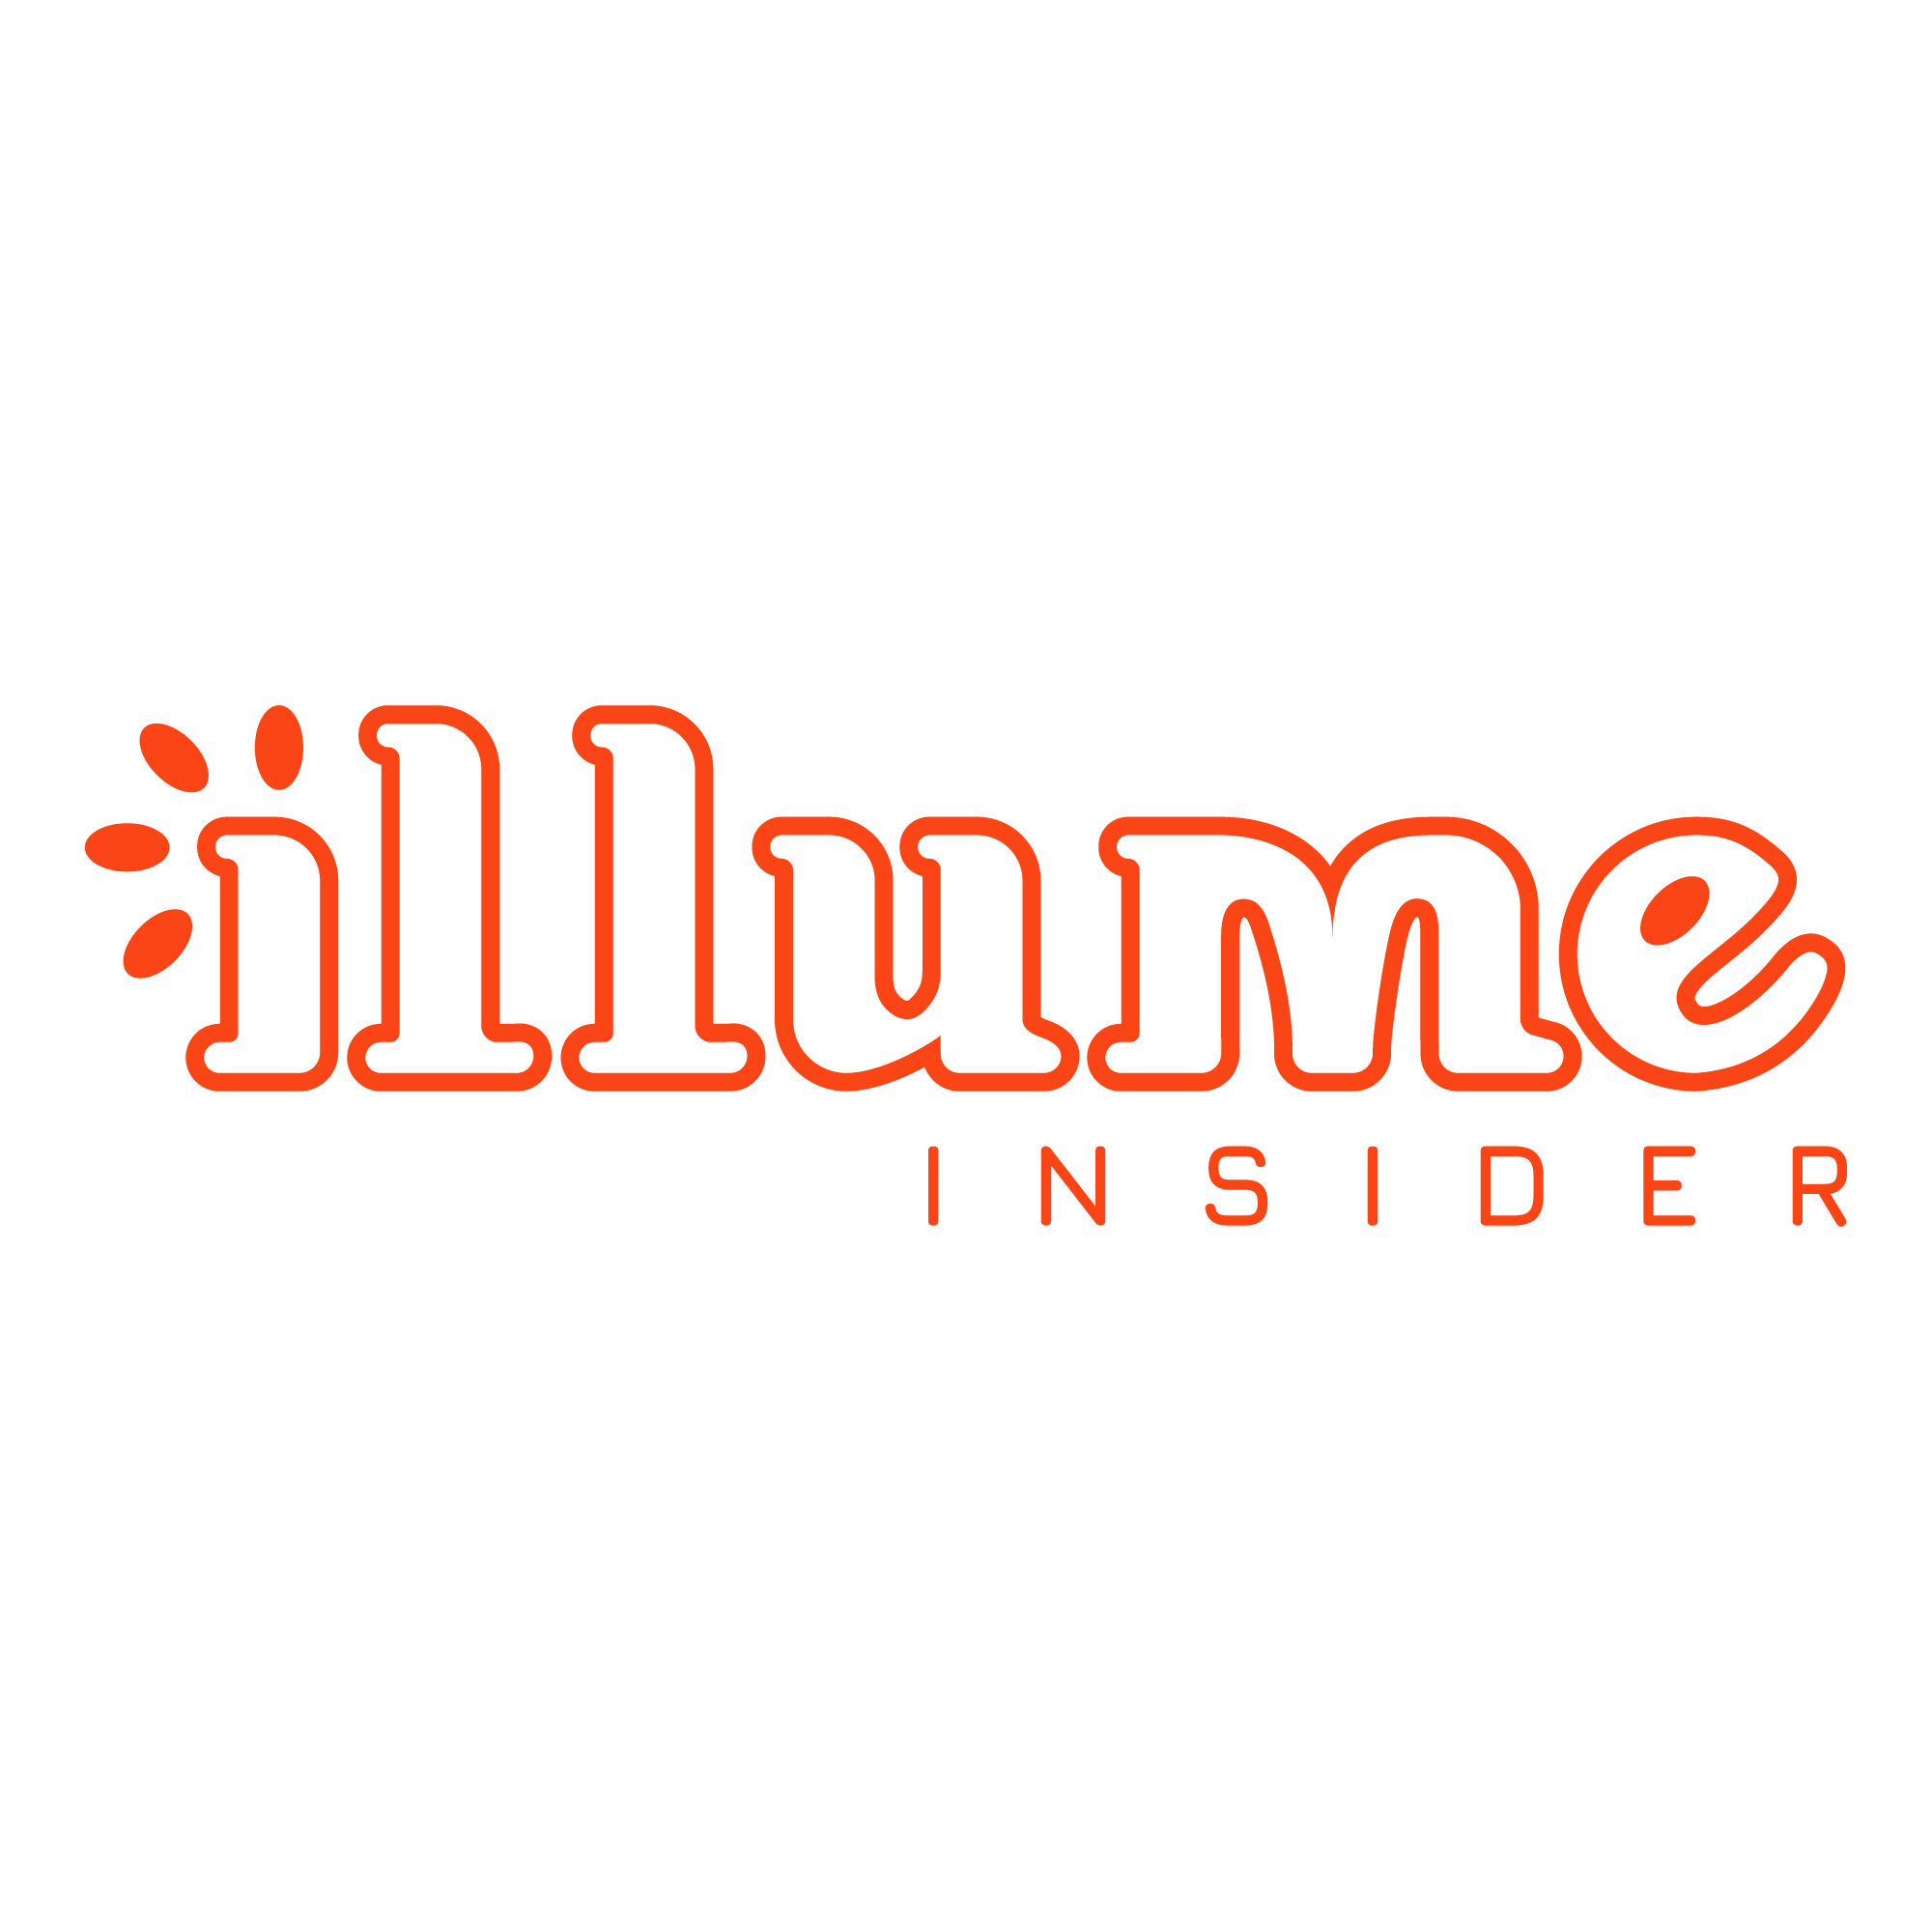 Illume Insider logo.